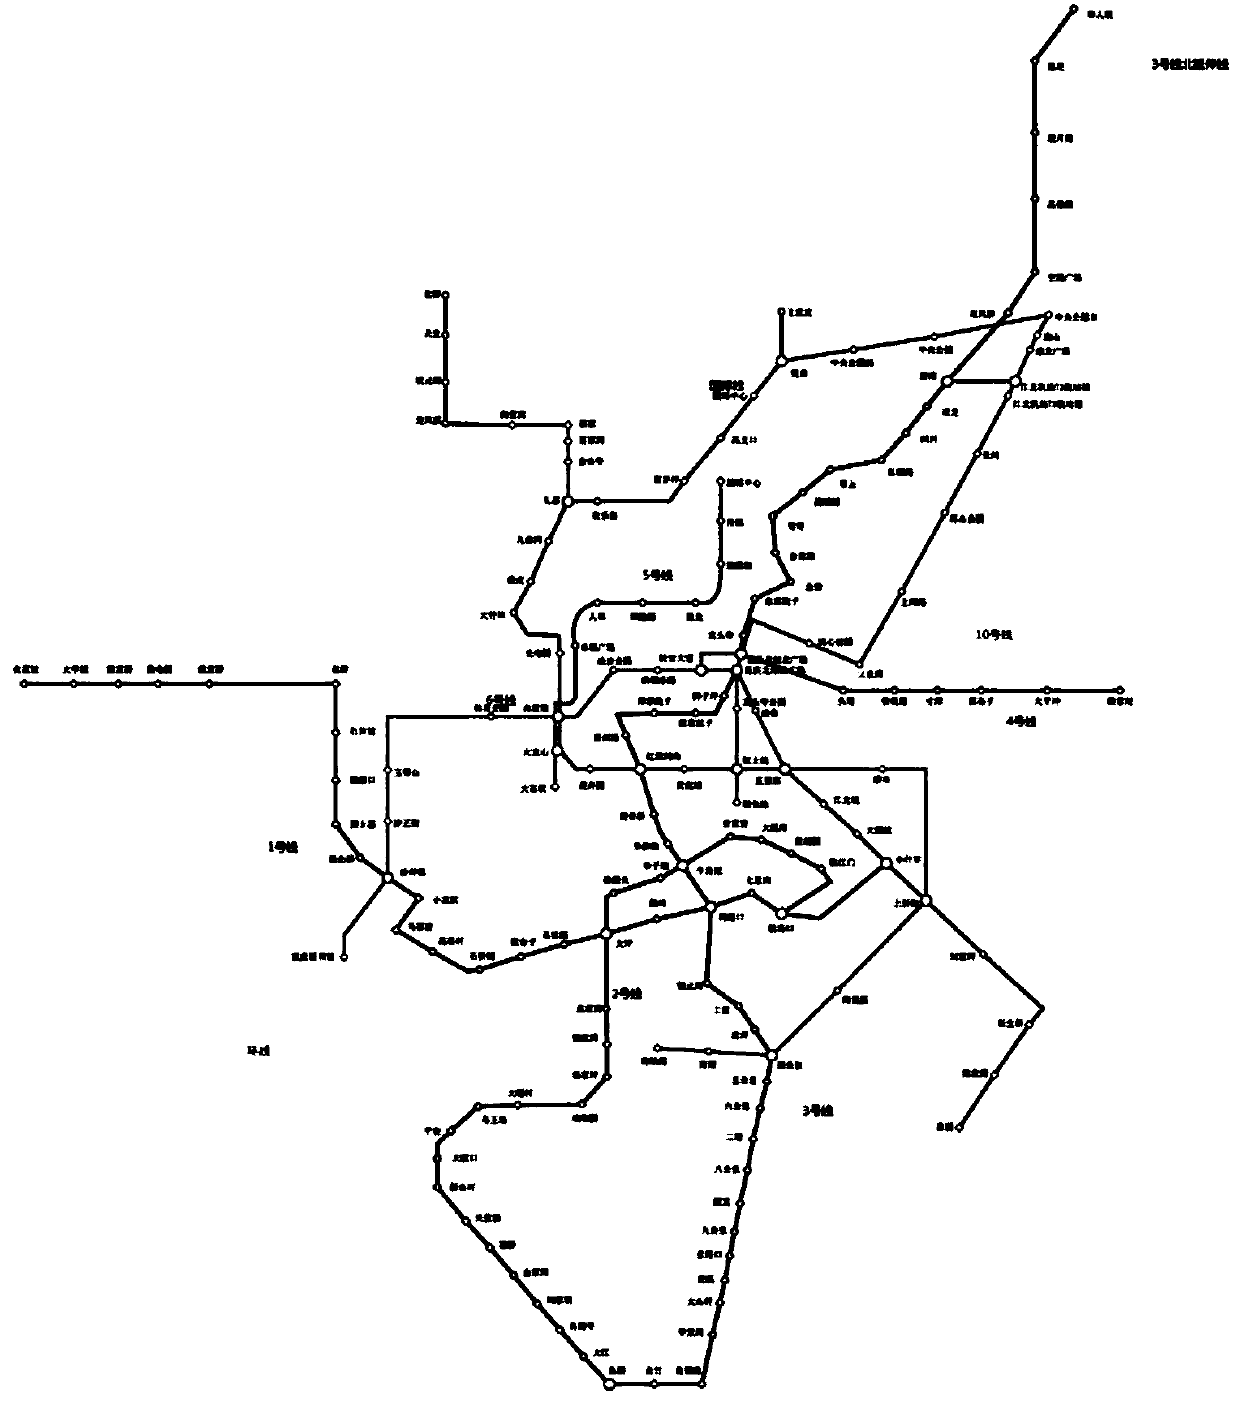 Urban rail transit road network safety assessment and enhancement method based on passenger flow distribution